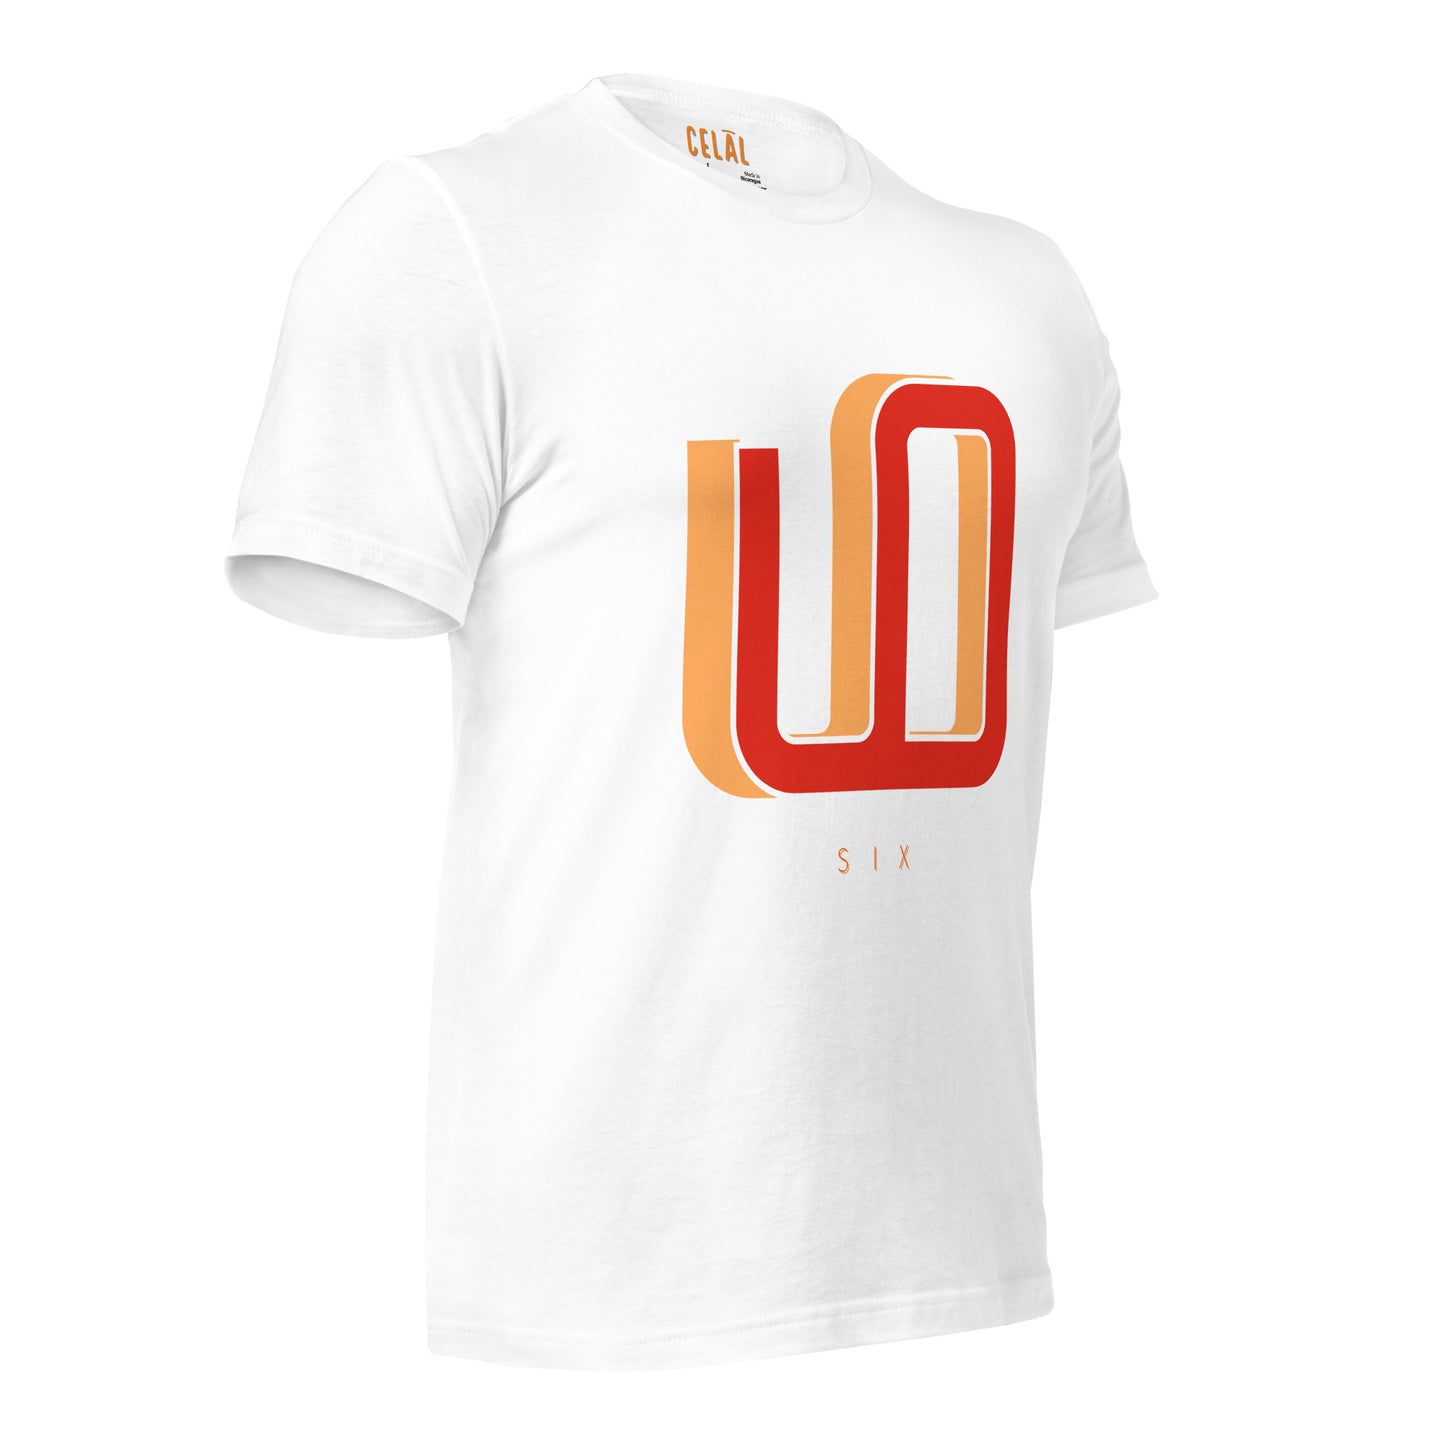 6 Unisex t-shirt